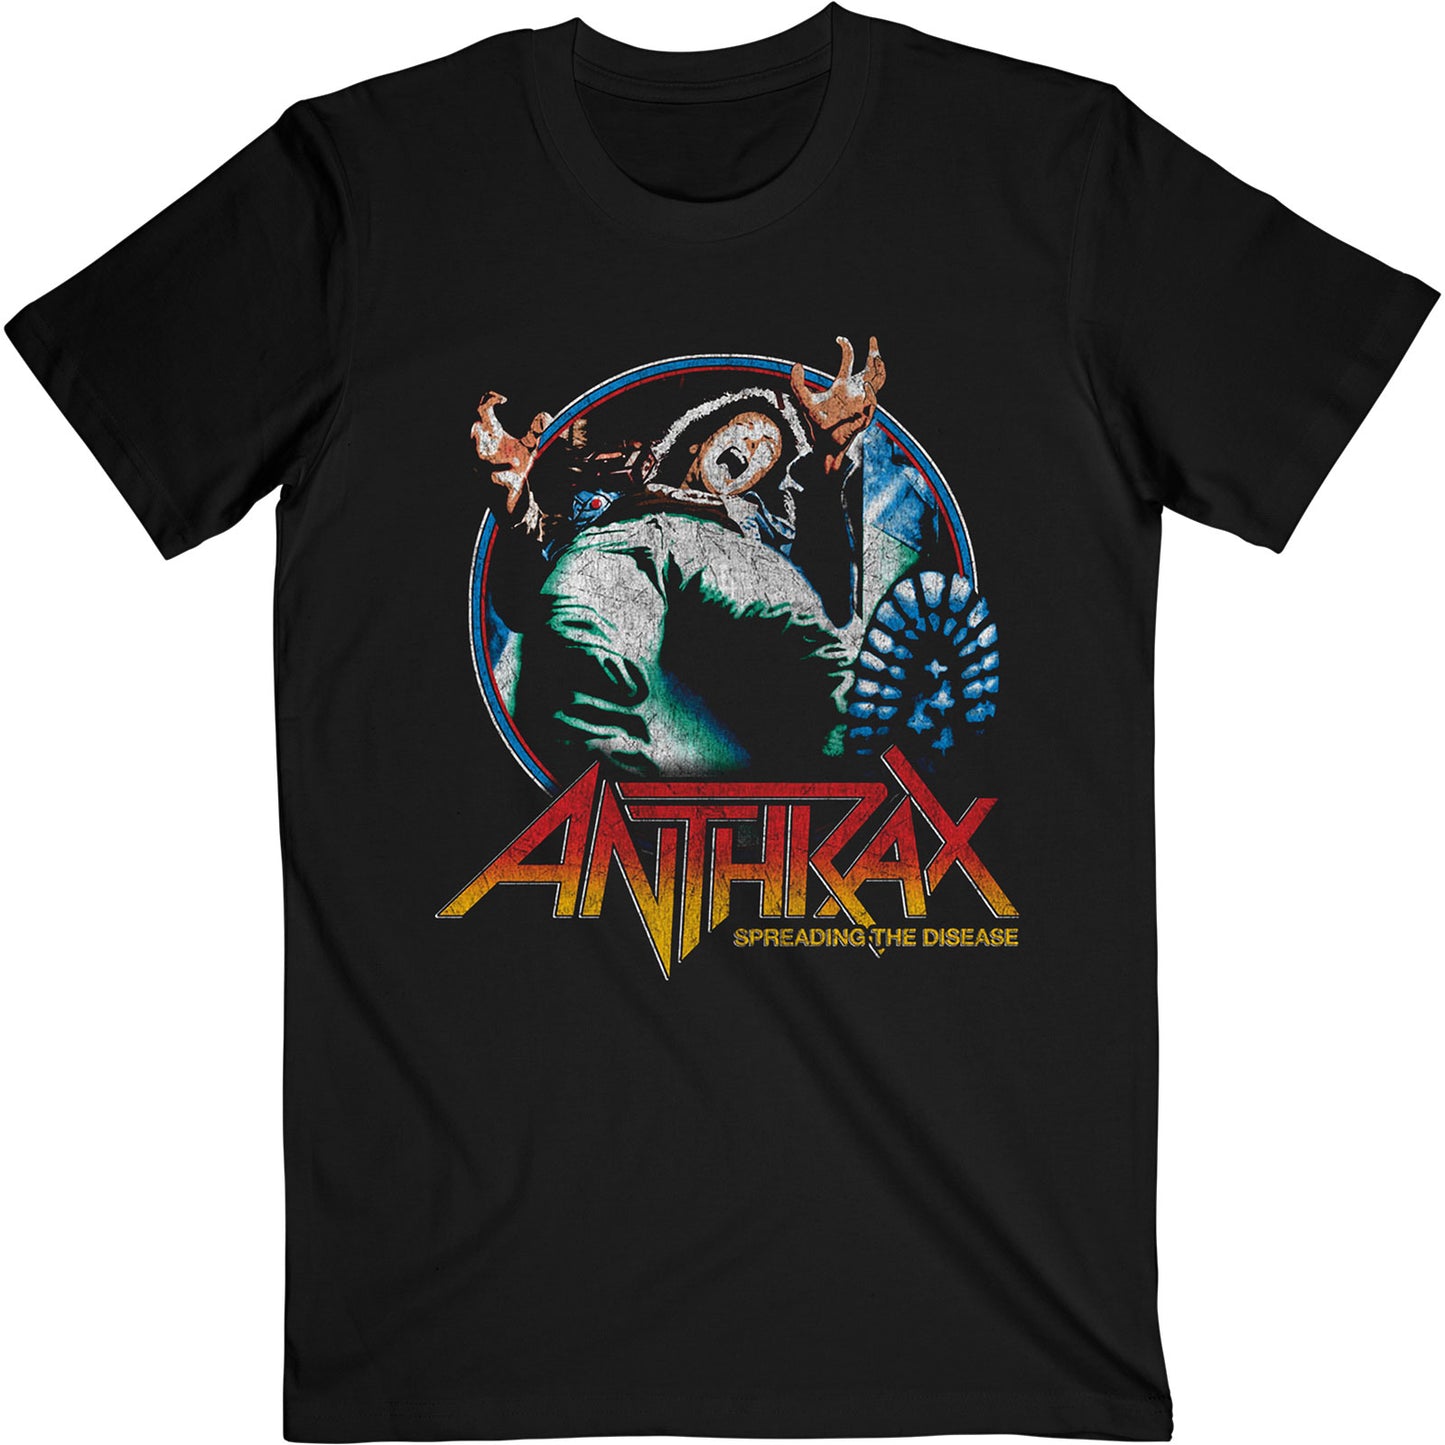 Anthrax T-Shirt: Spreading Vignette